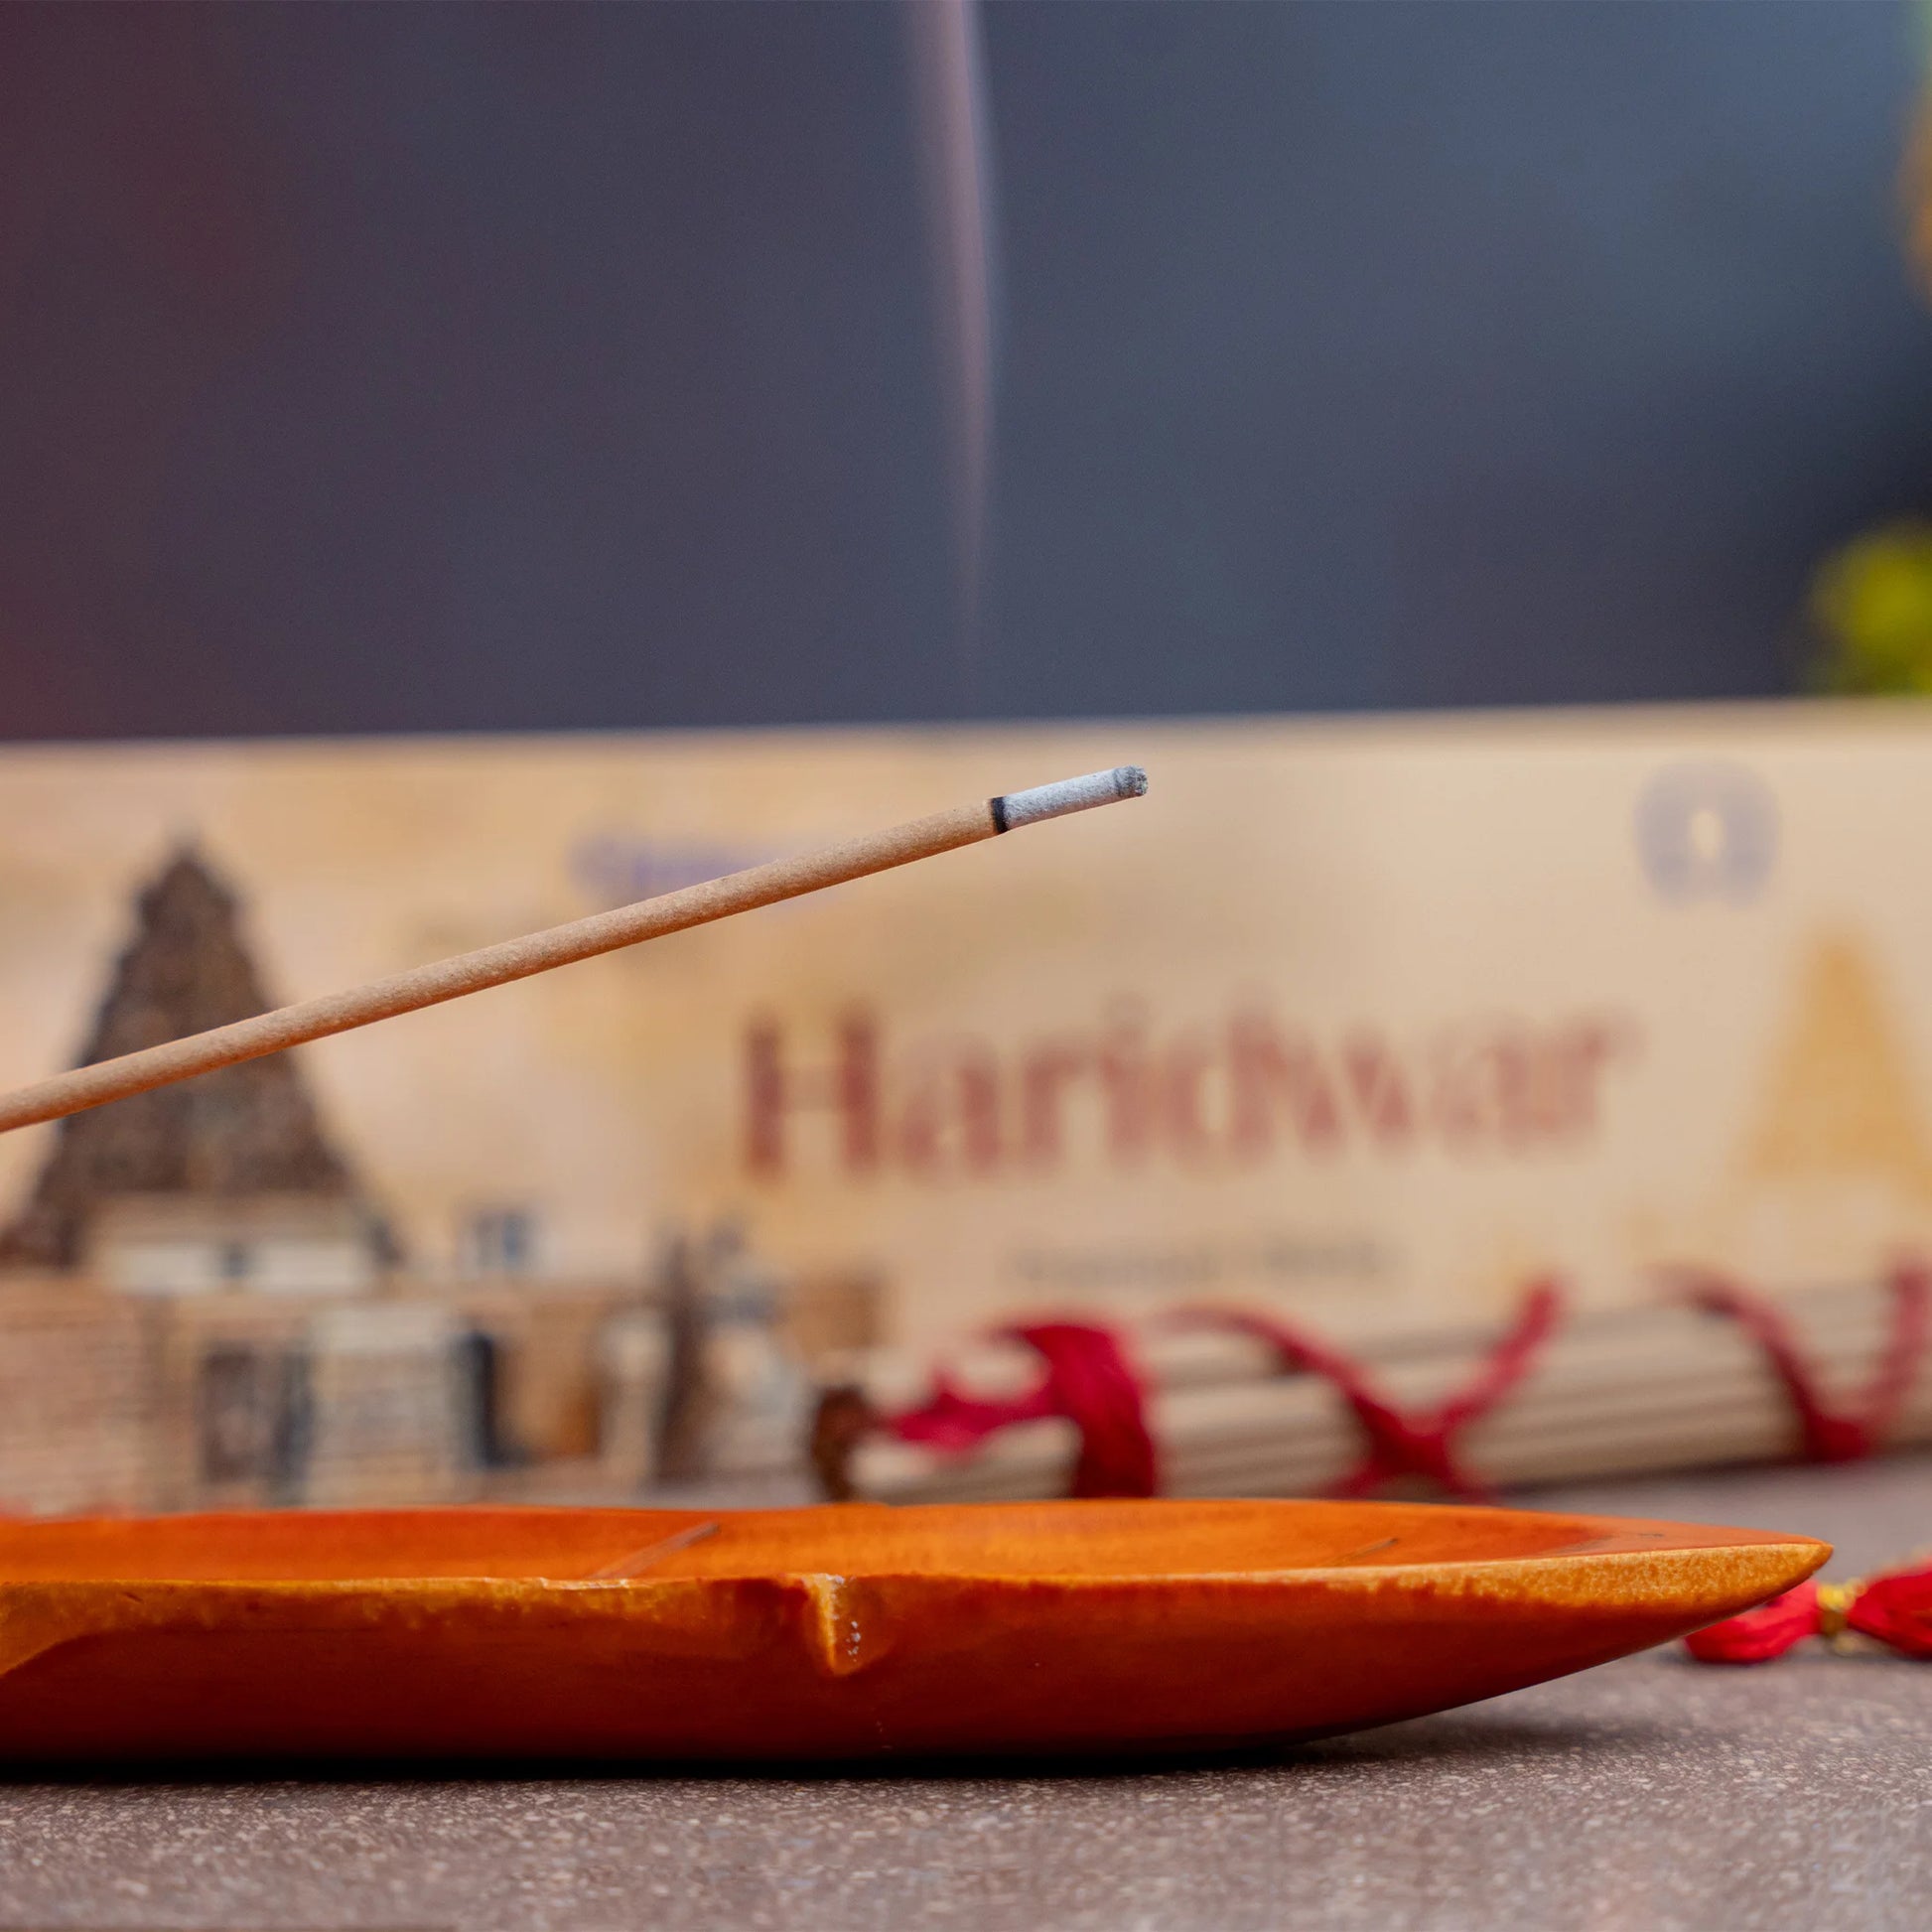 haridwar-premium-incense-sticks